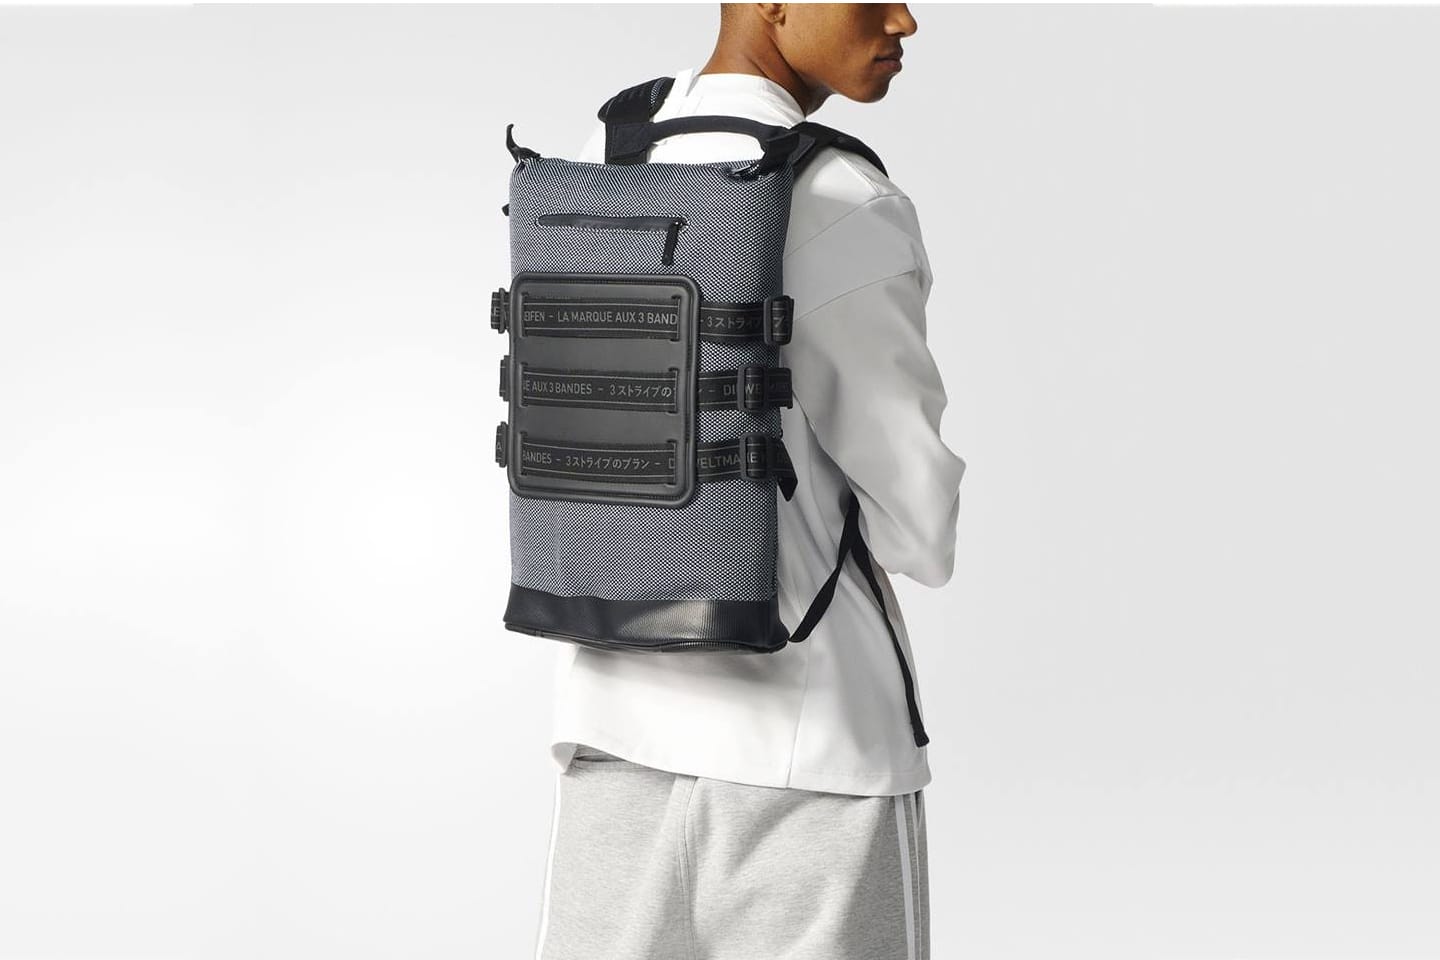 adidas originals national primeknit backpack